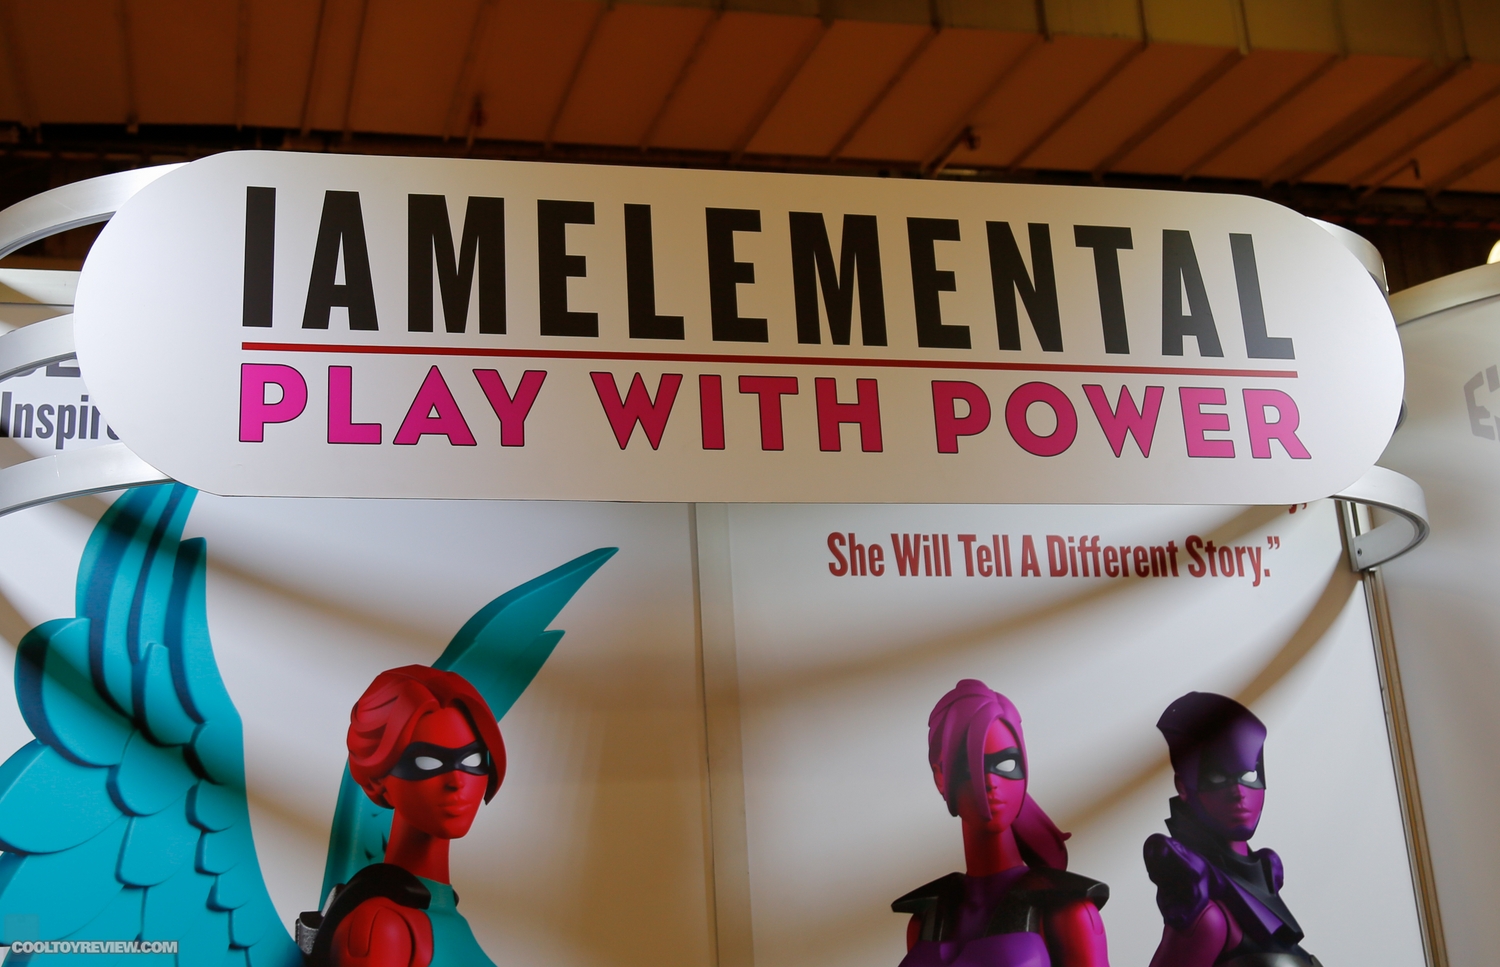 2015-International-Toy-Fair-Iamelemental-Play-With-Power-001.jpg